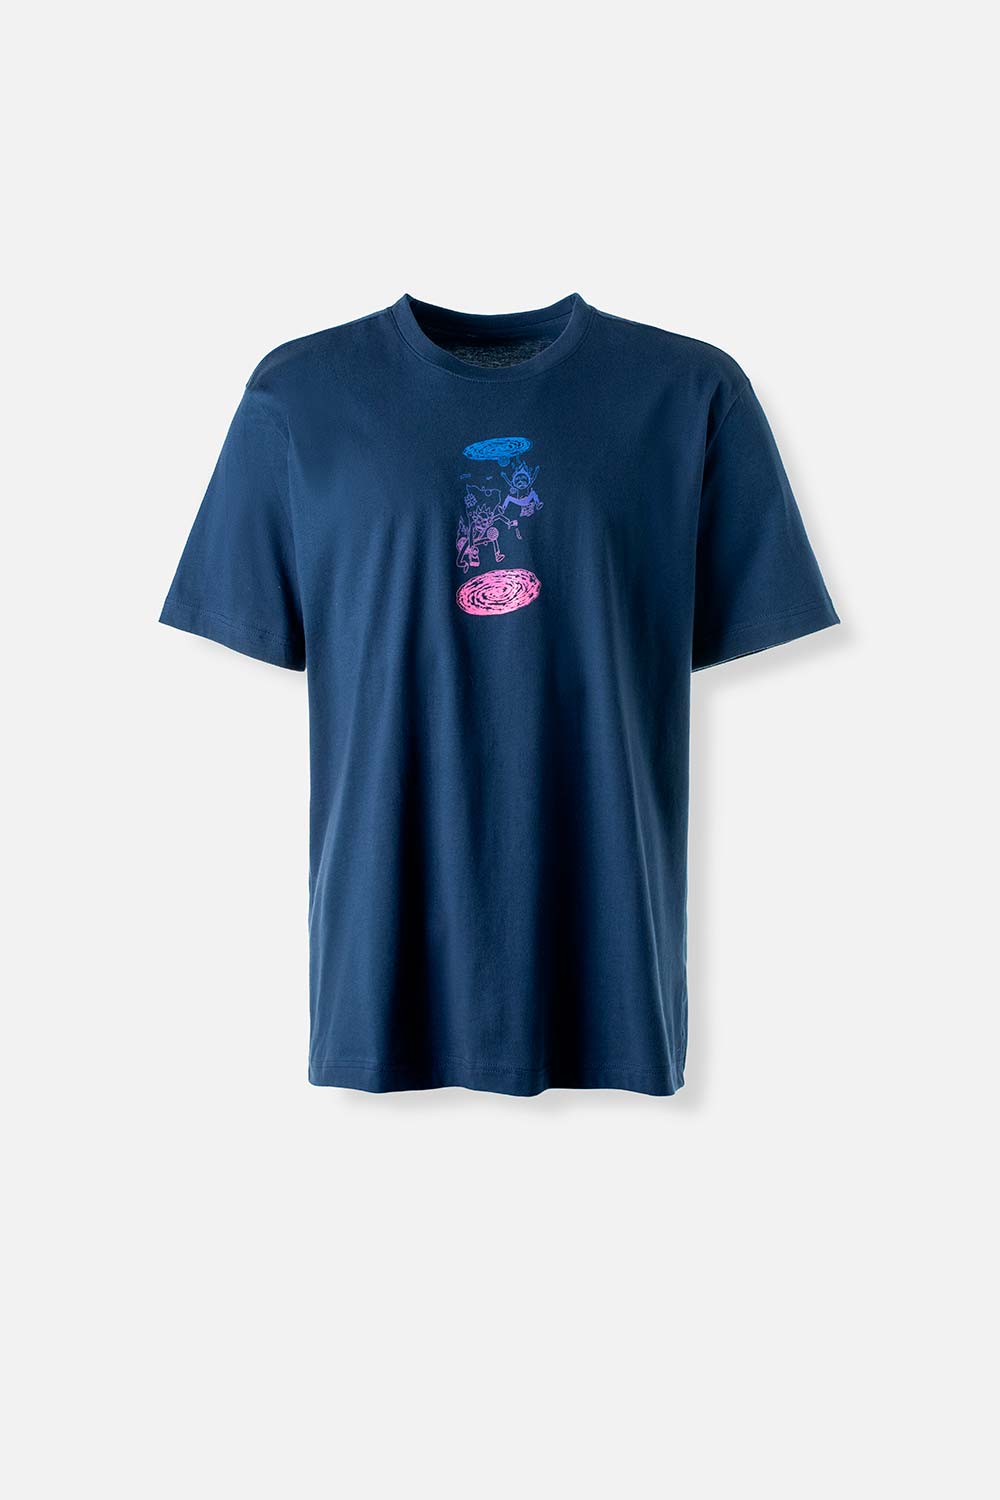 Camiseta de Rick and Morty manga corta azul para hombre S-0